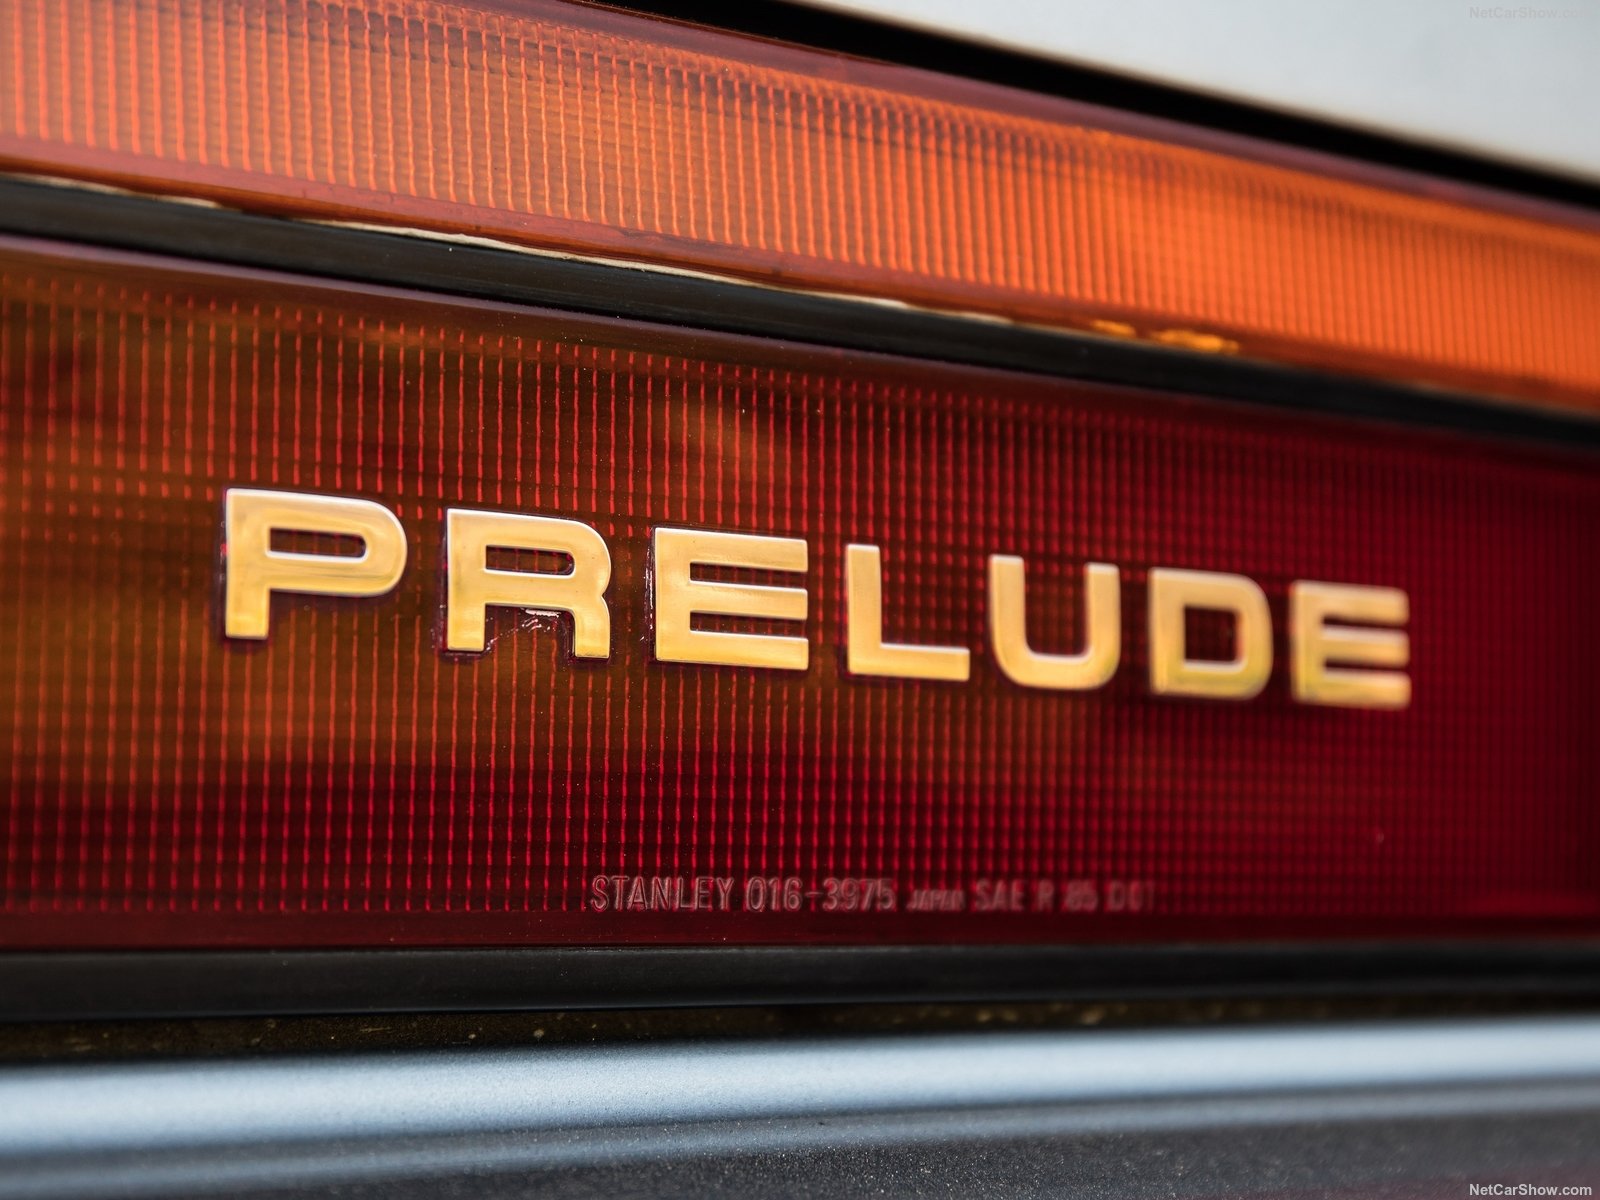 Honda Prelude 1989 Honda-Prelude-1989-1600-0b